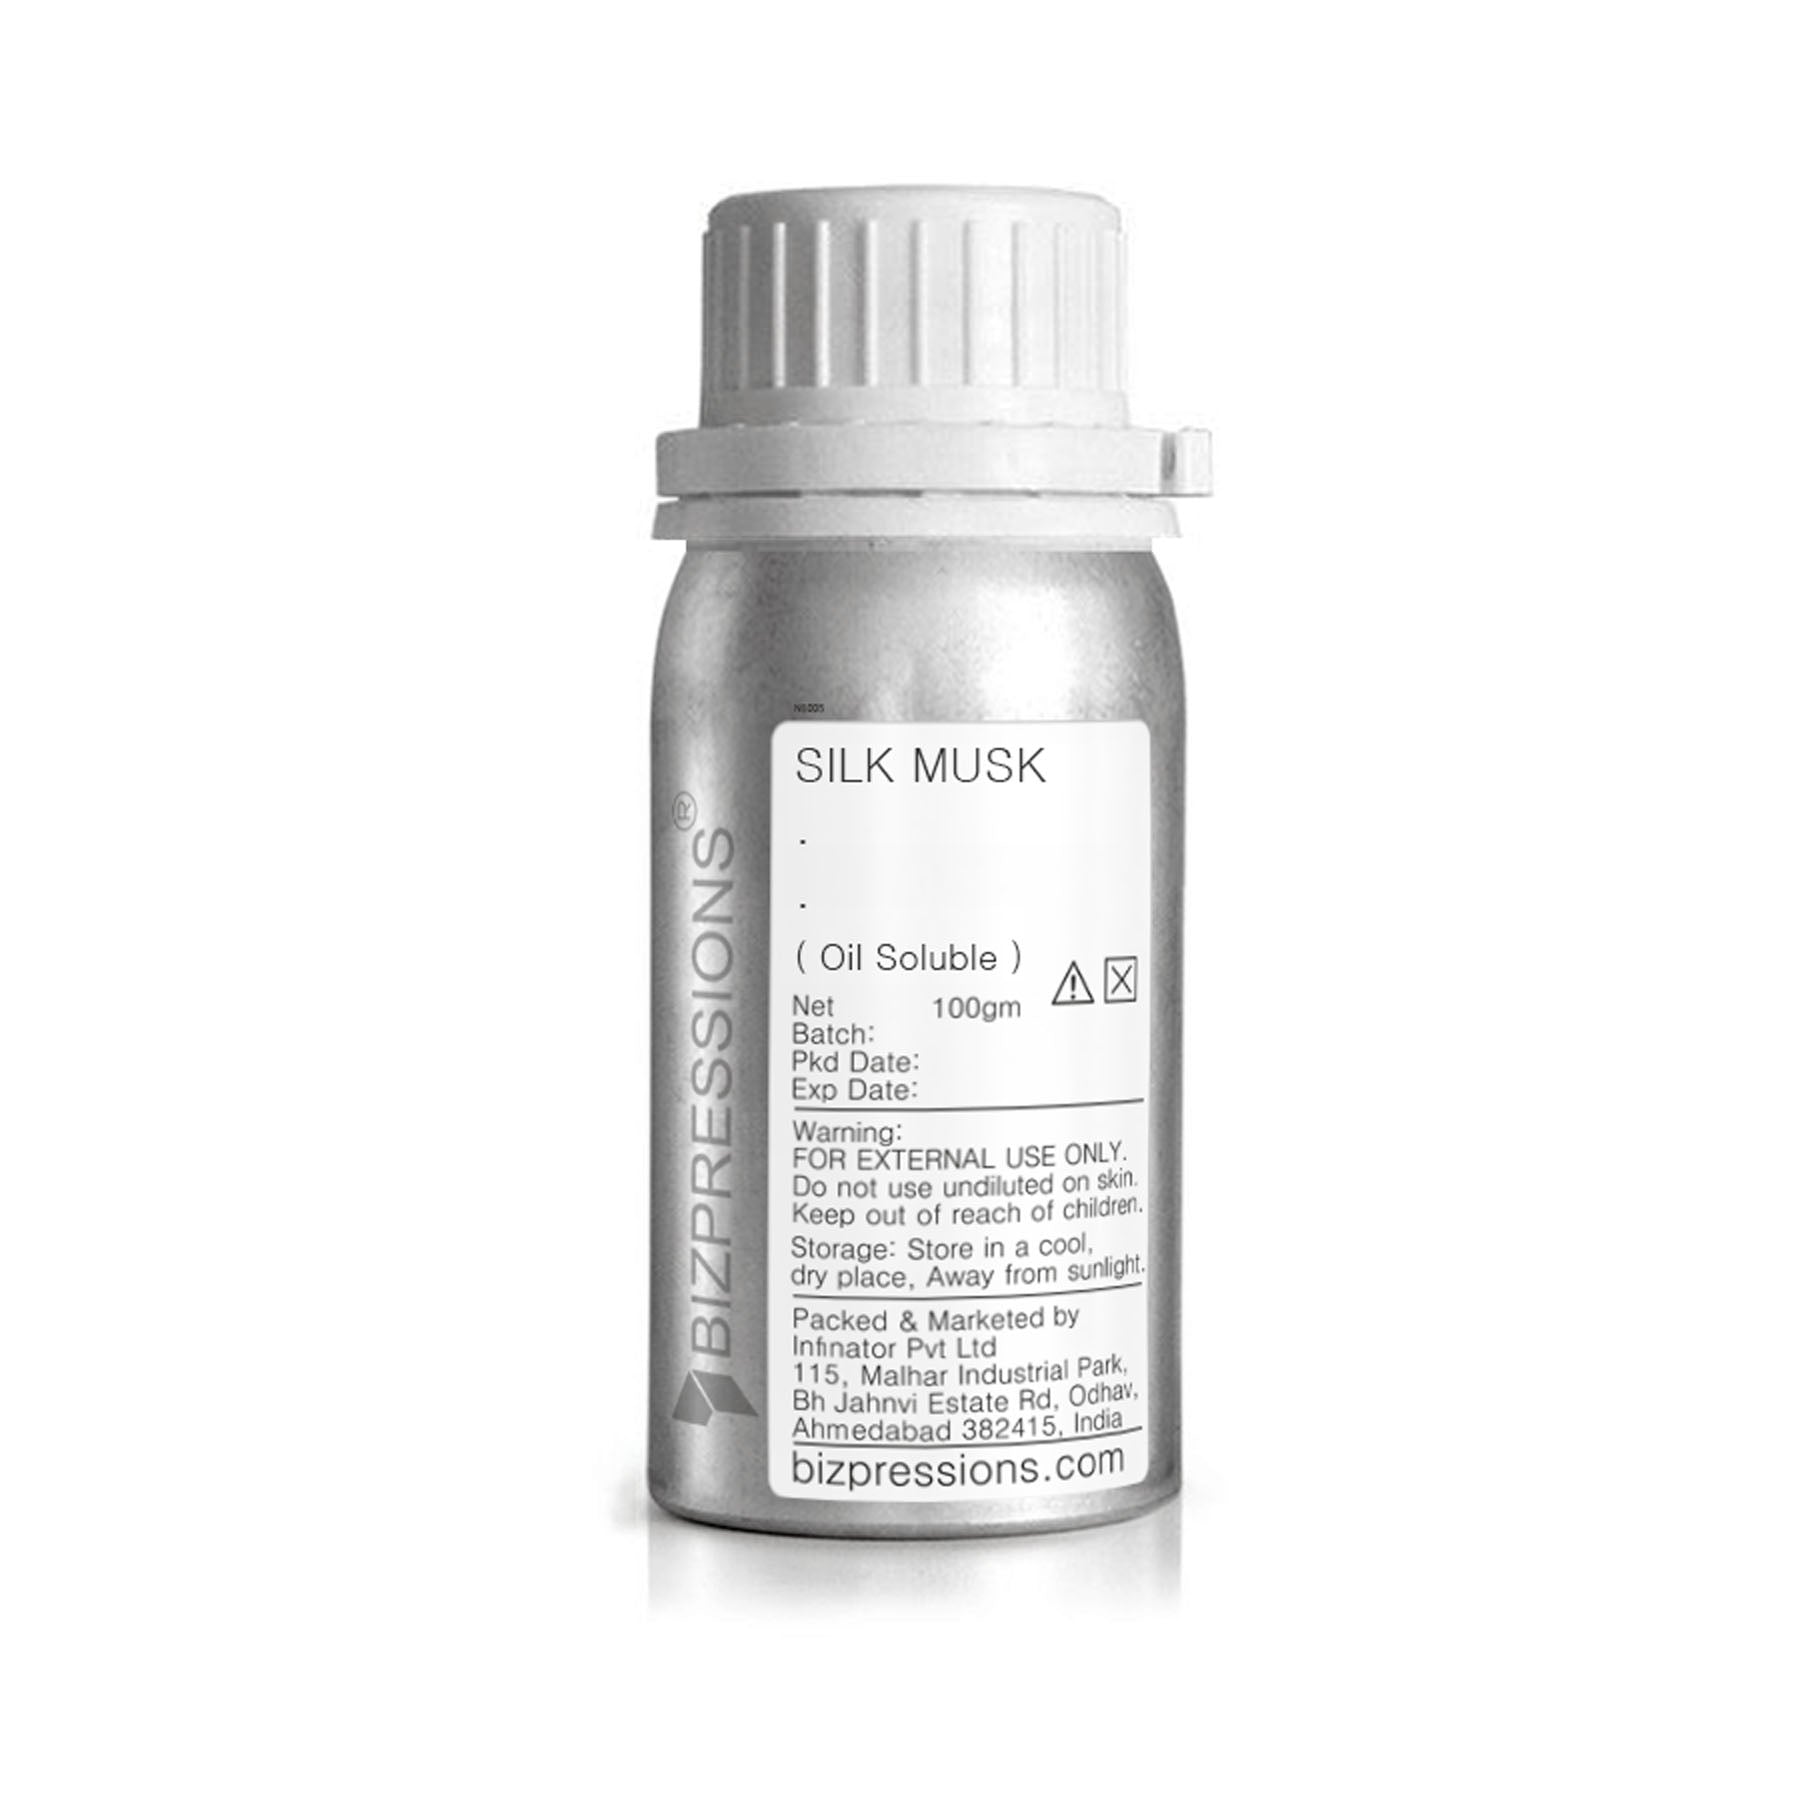 SILK MUSK - Fragrance ( Oil Soluble ) - 100 gm